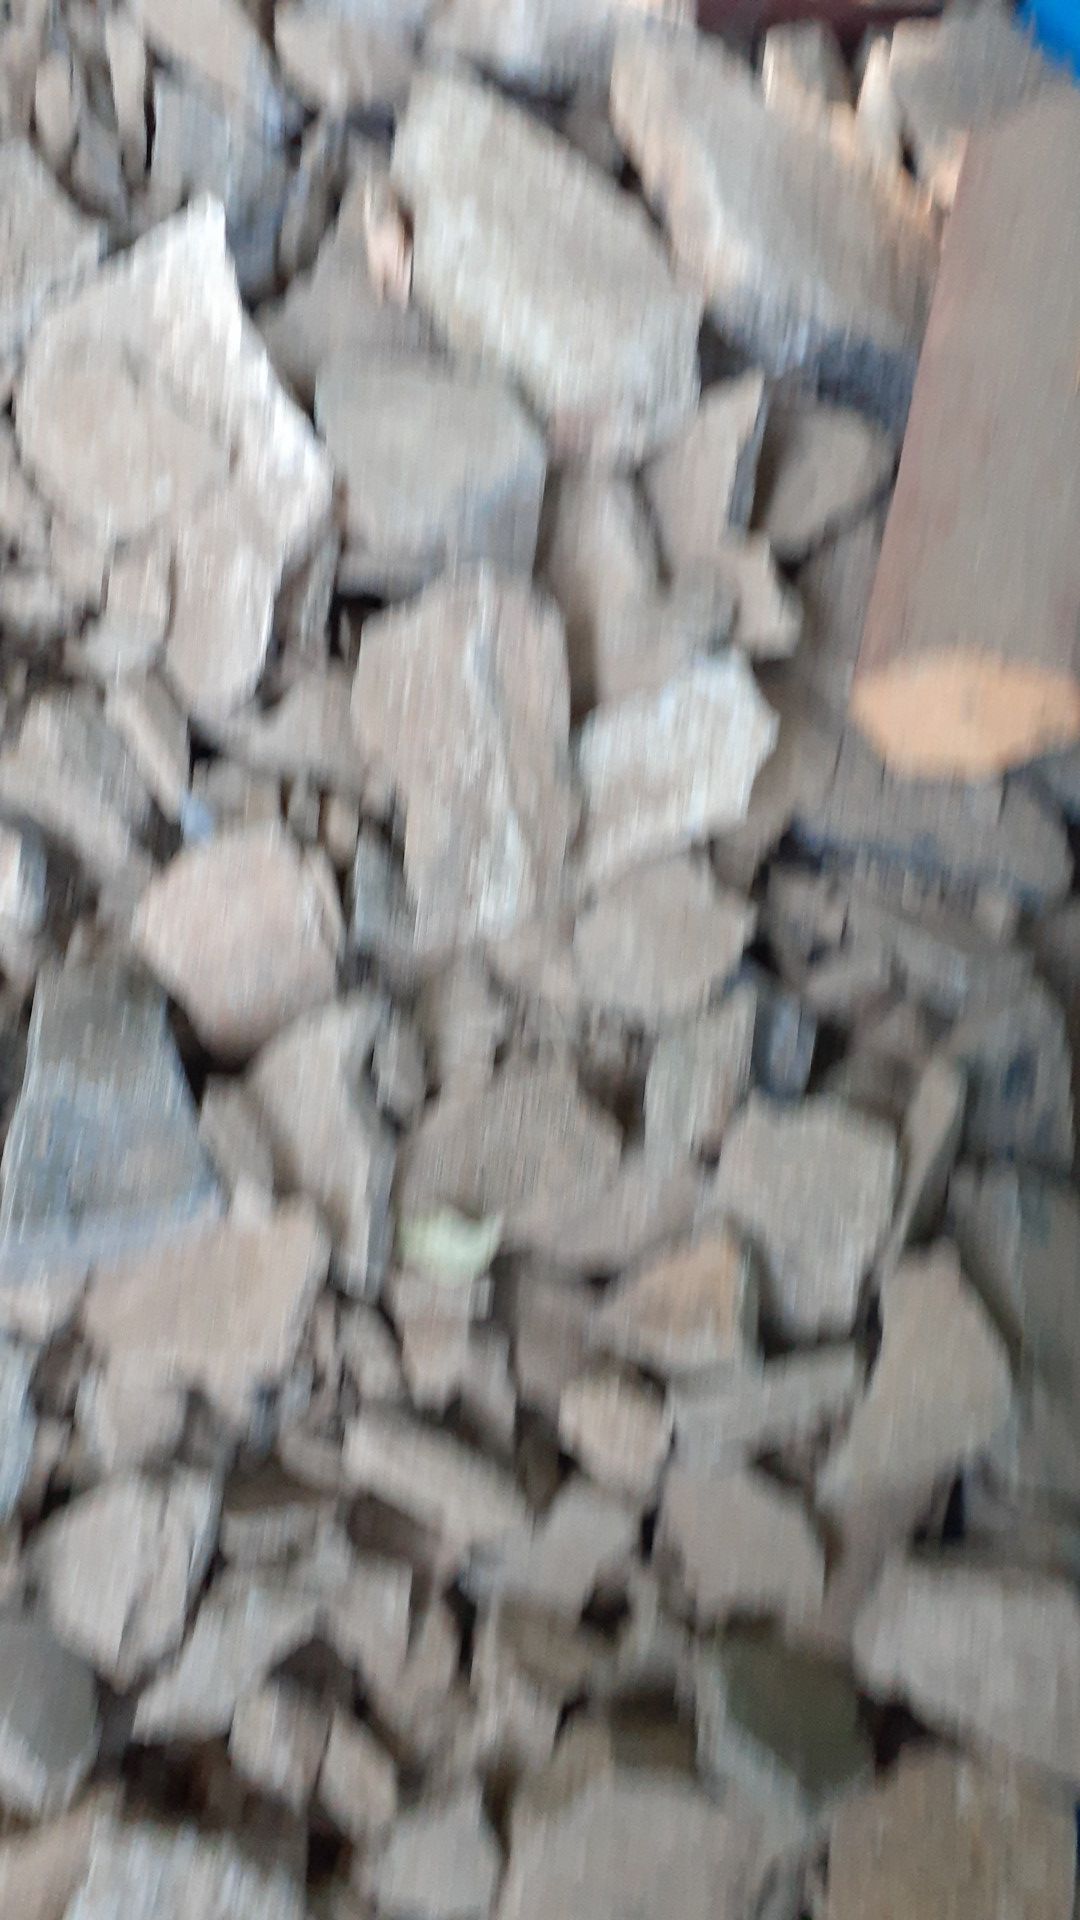 Smallish chunks of flagstone/shale